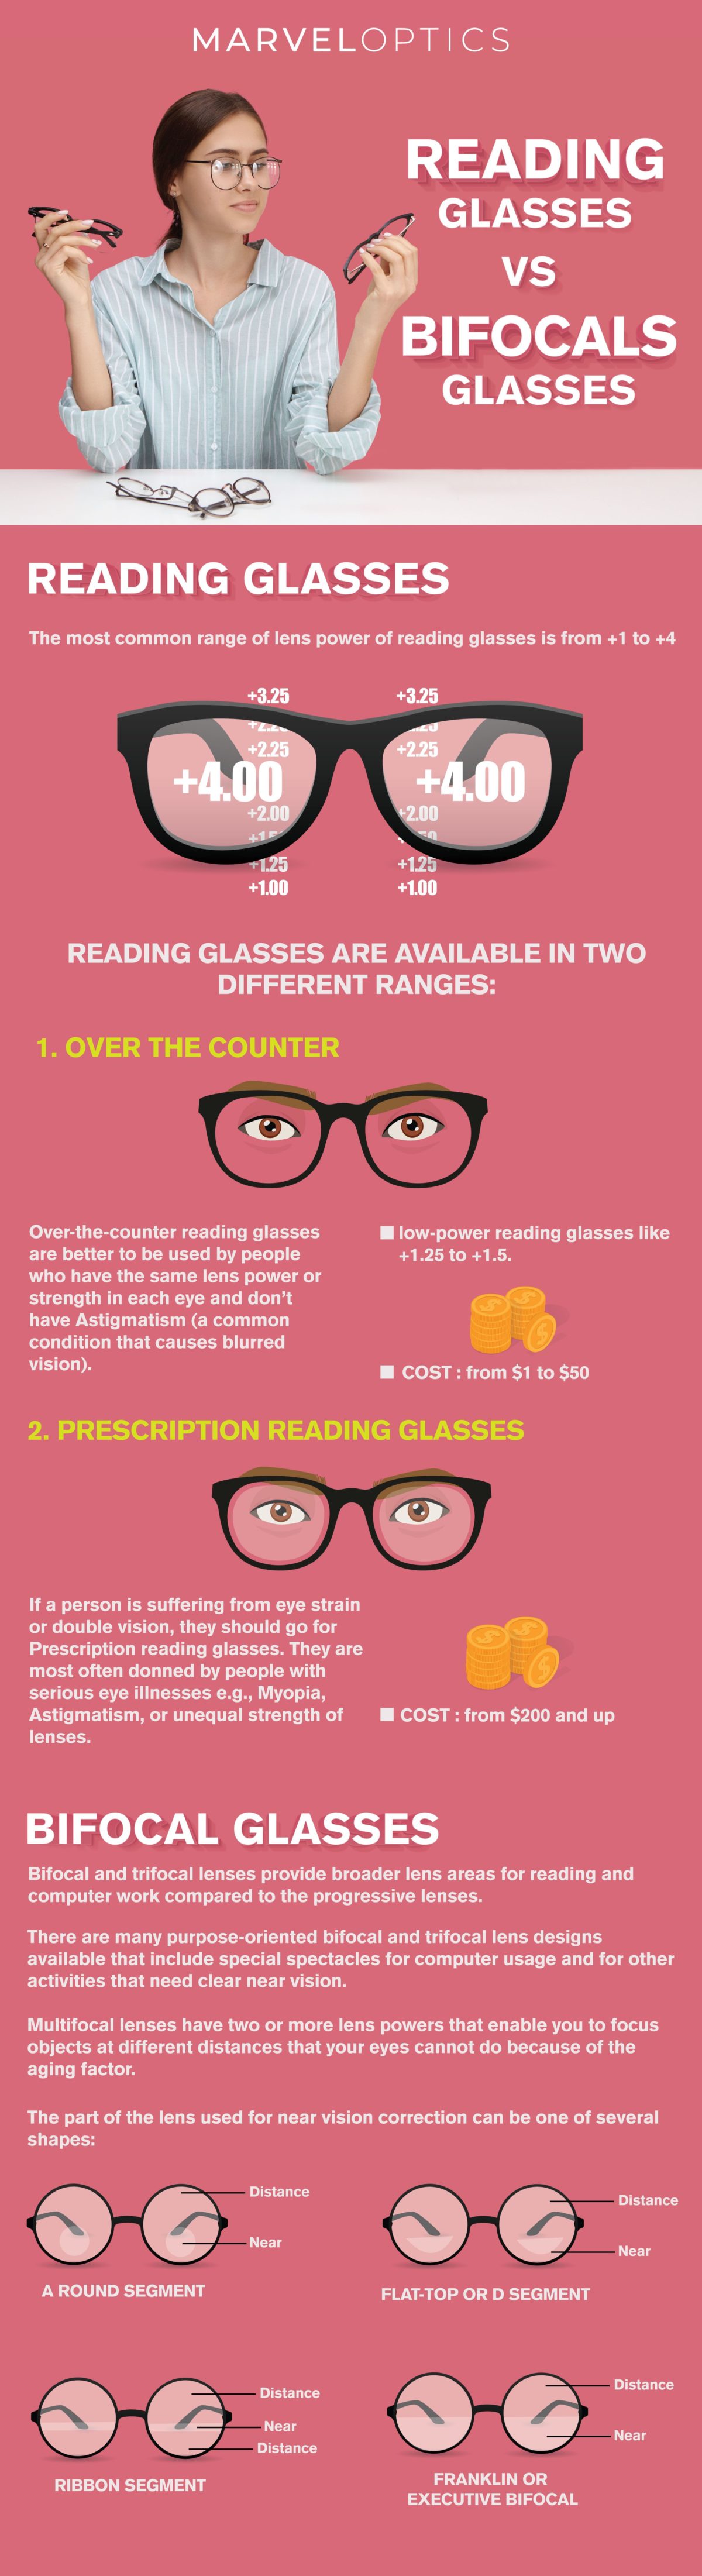 Reading Glasses vs Bifocals Glasses Infographic